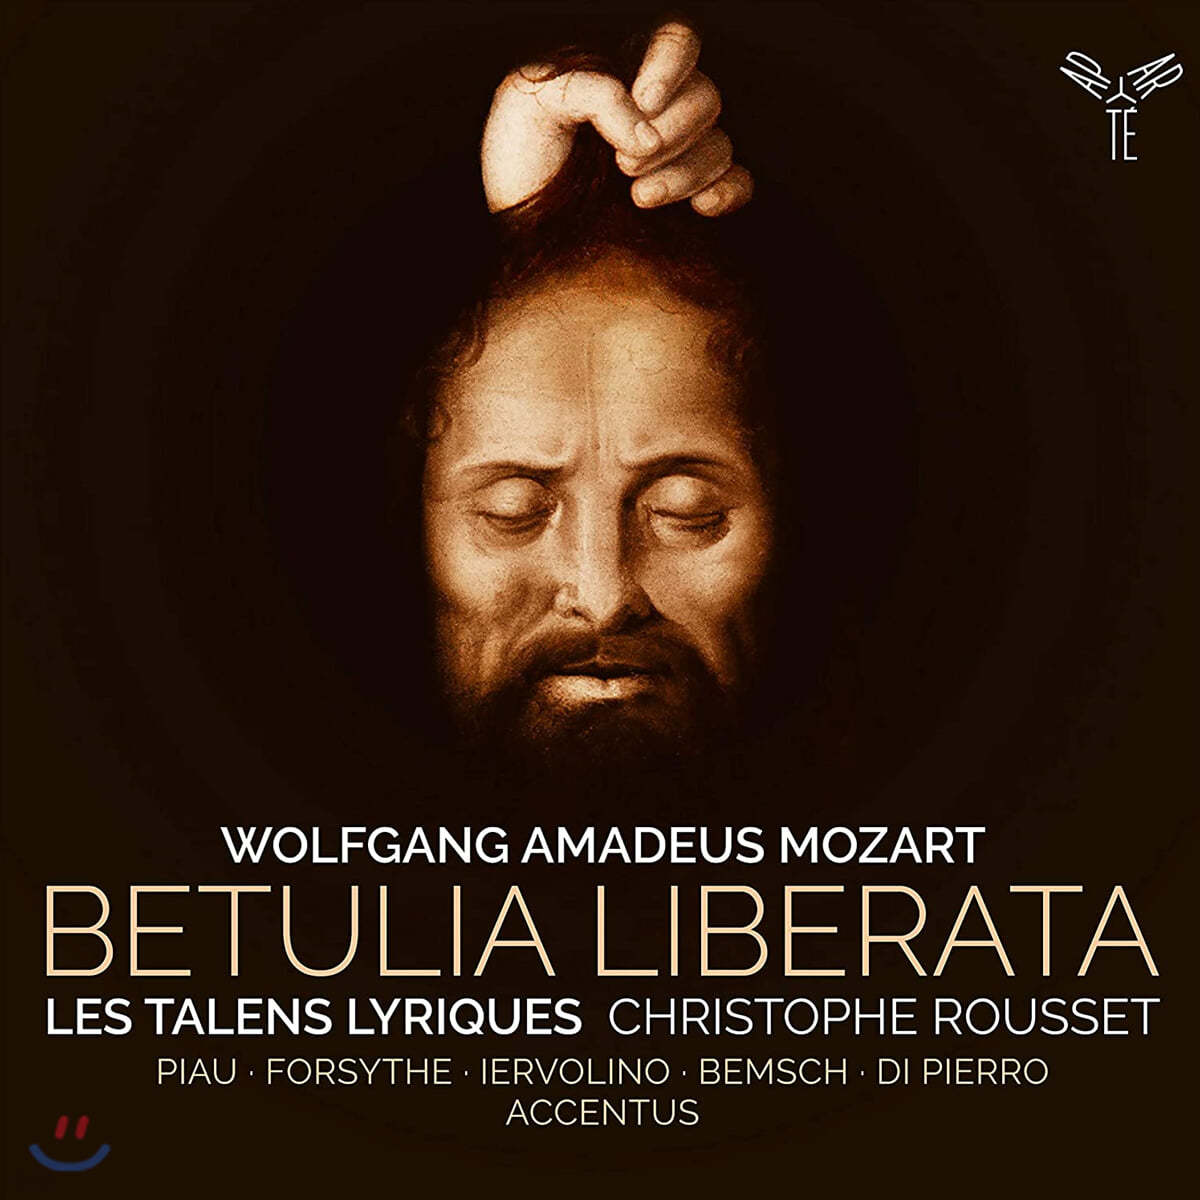 Christophe Rousset 모차르트: 오라토리오 '구원받은 베툴리아' (Mozart: Betulia liberata K118) 